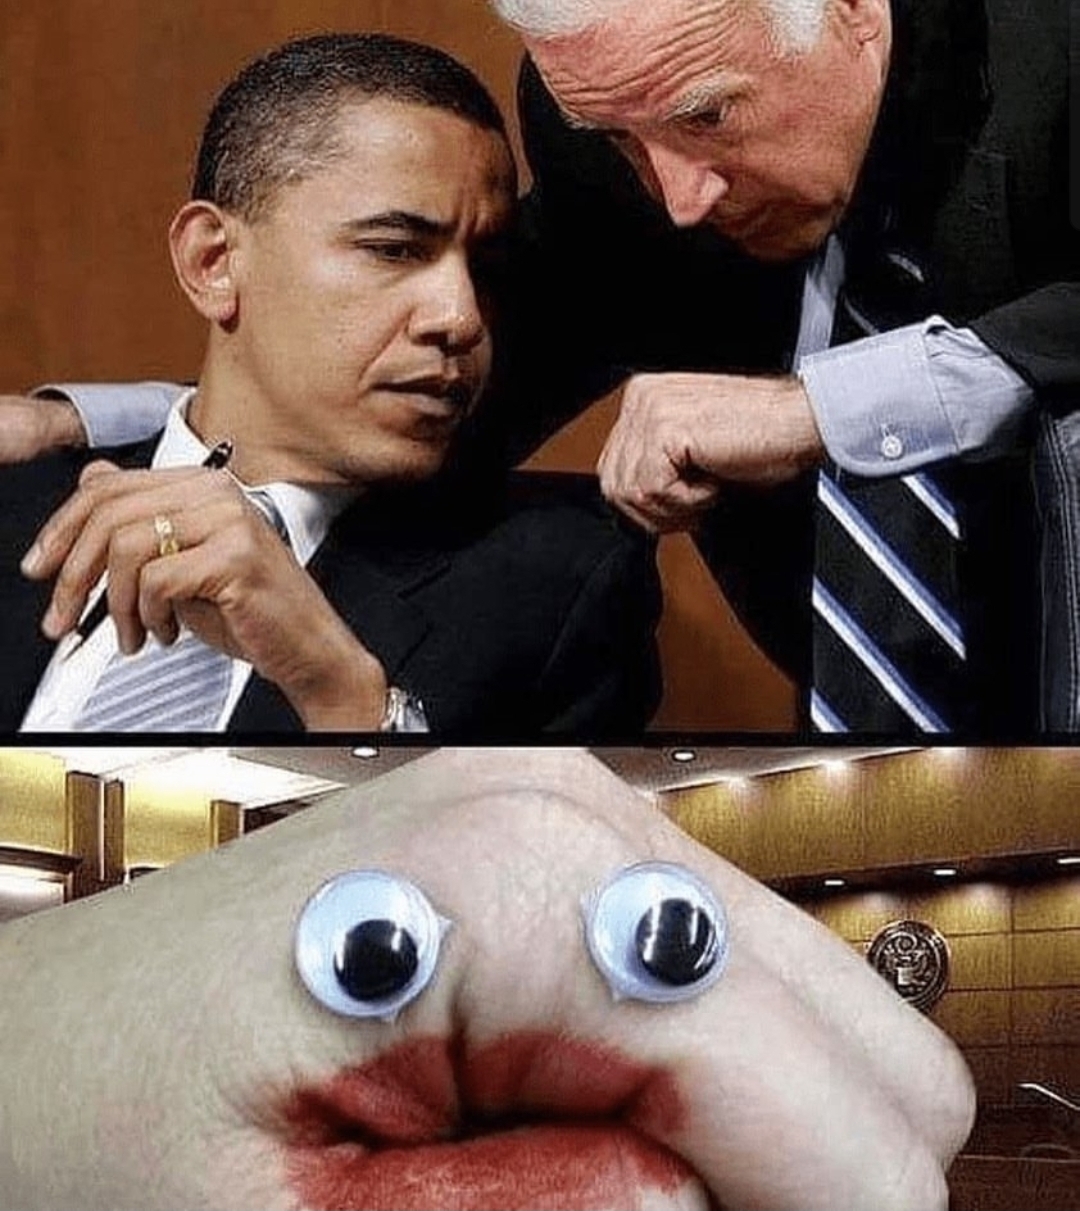 Joe Biden Mr. Handstroke Blank Meme Template